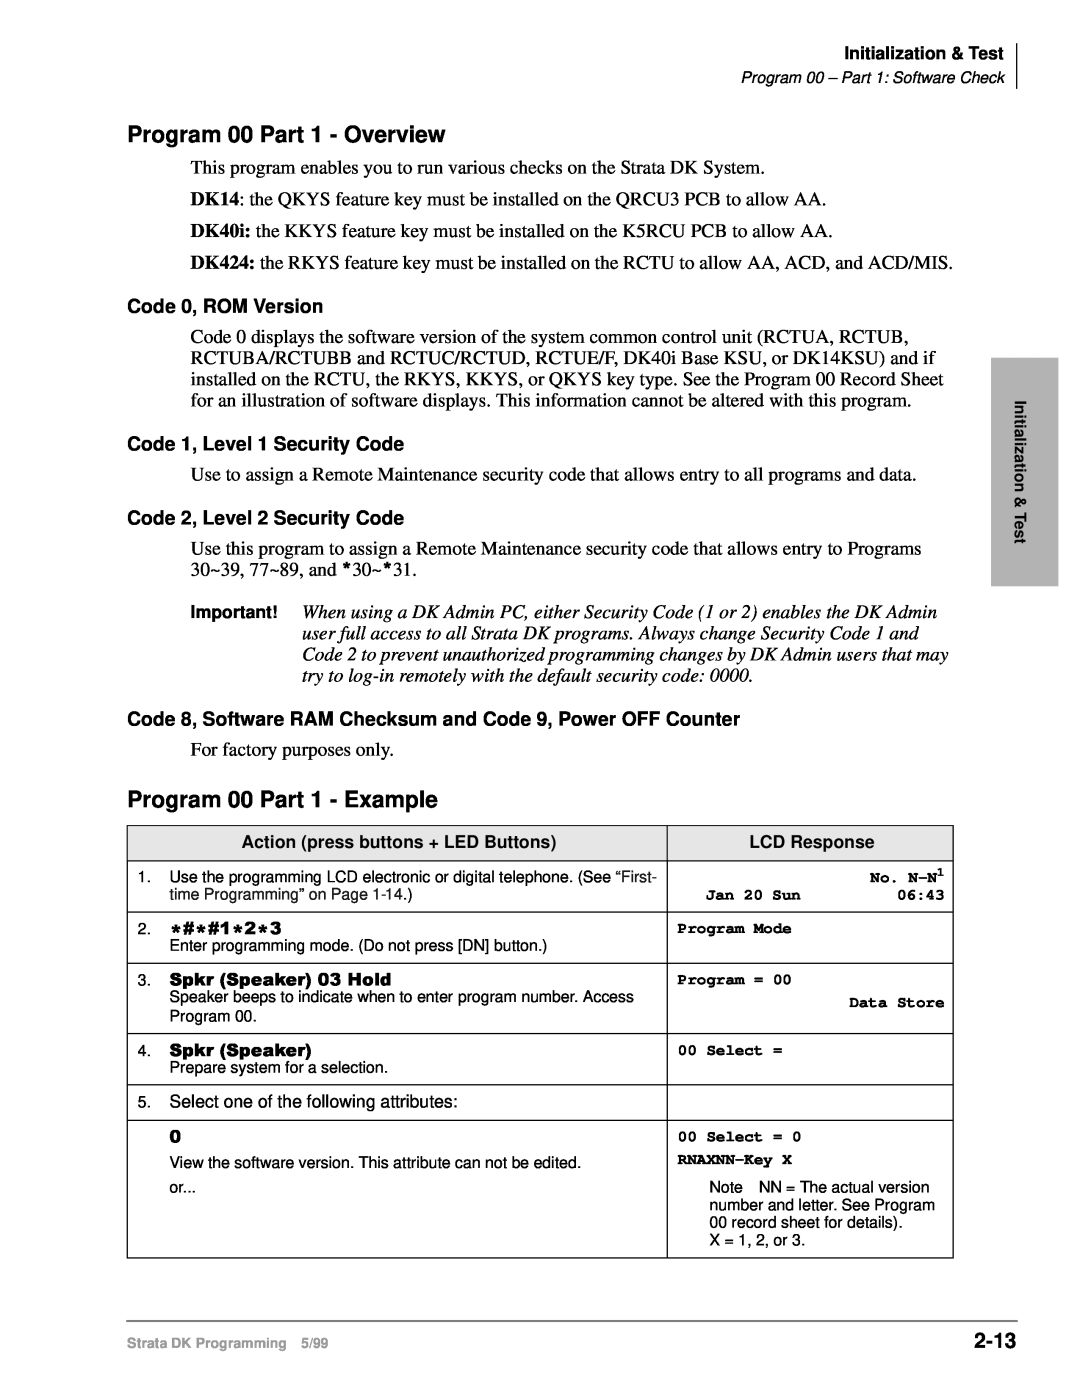 Toshiba dk14 manual Program 00 Part 1 - Overview, Program 00 Part 1 - Example, 2-13, Code 0, ROM Version 